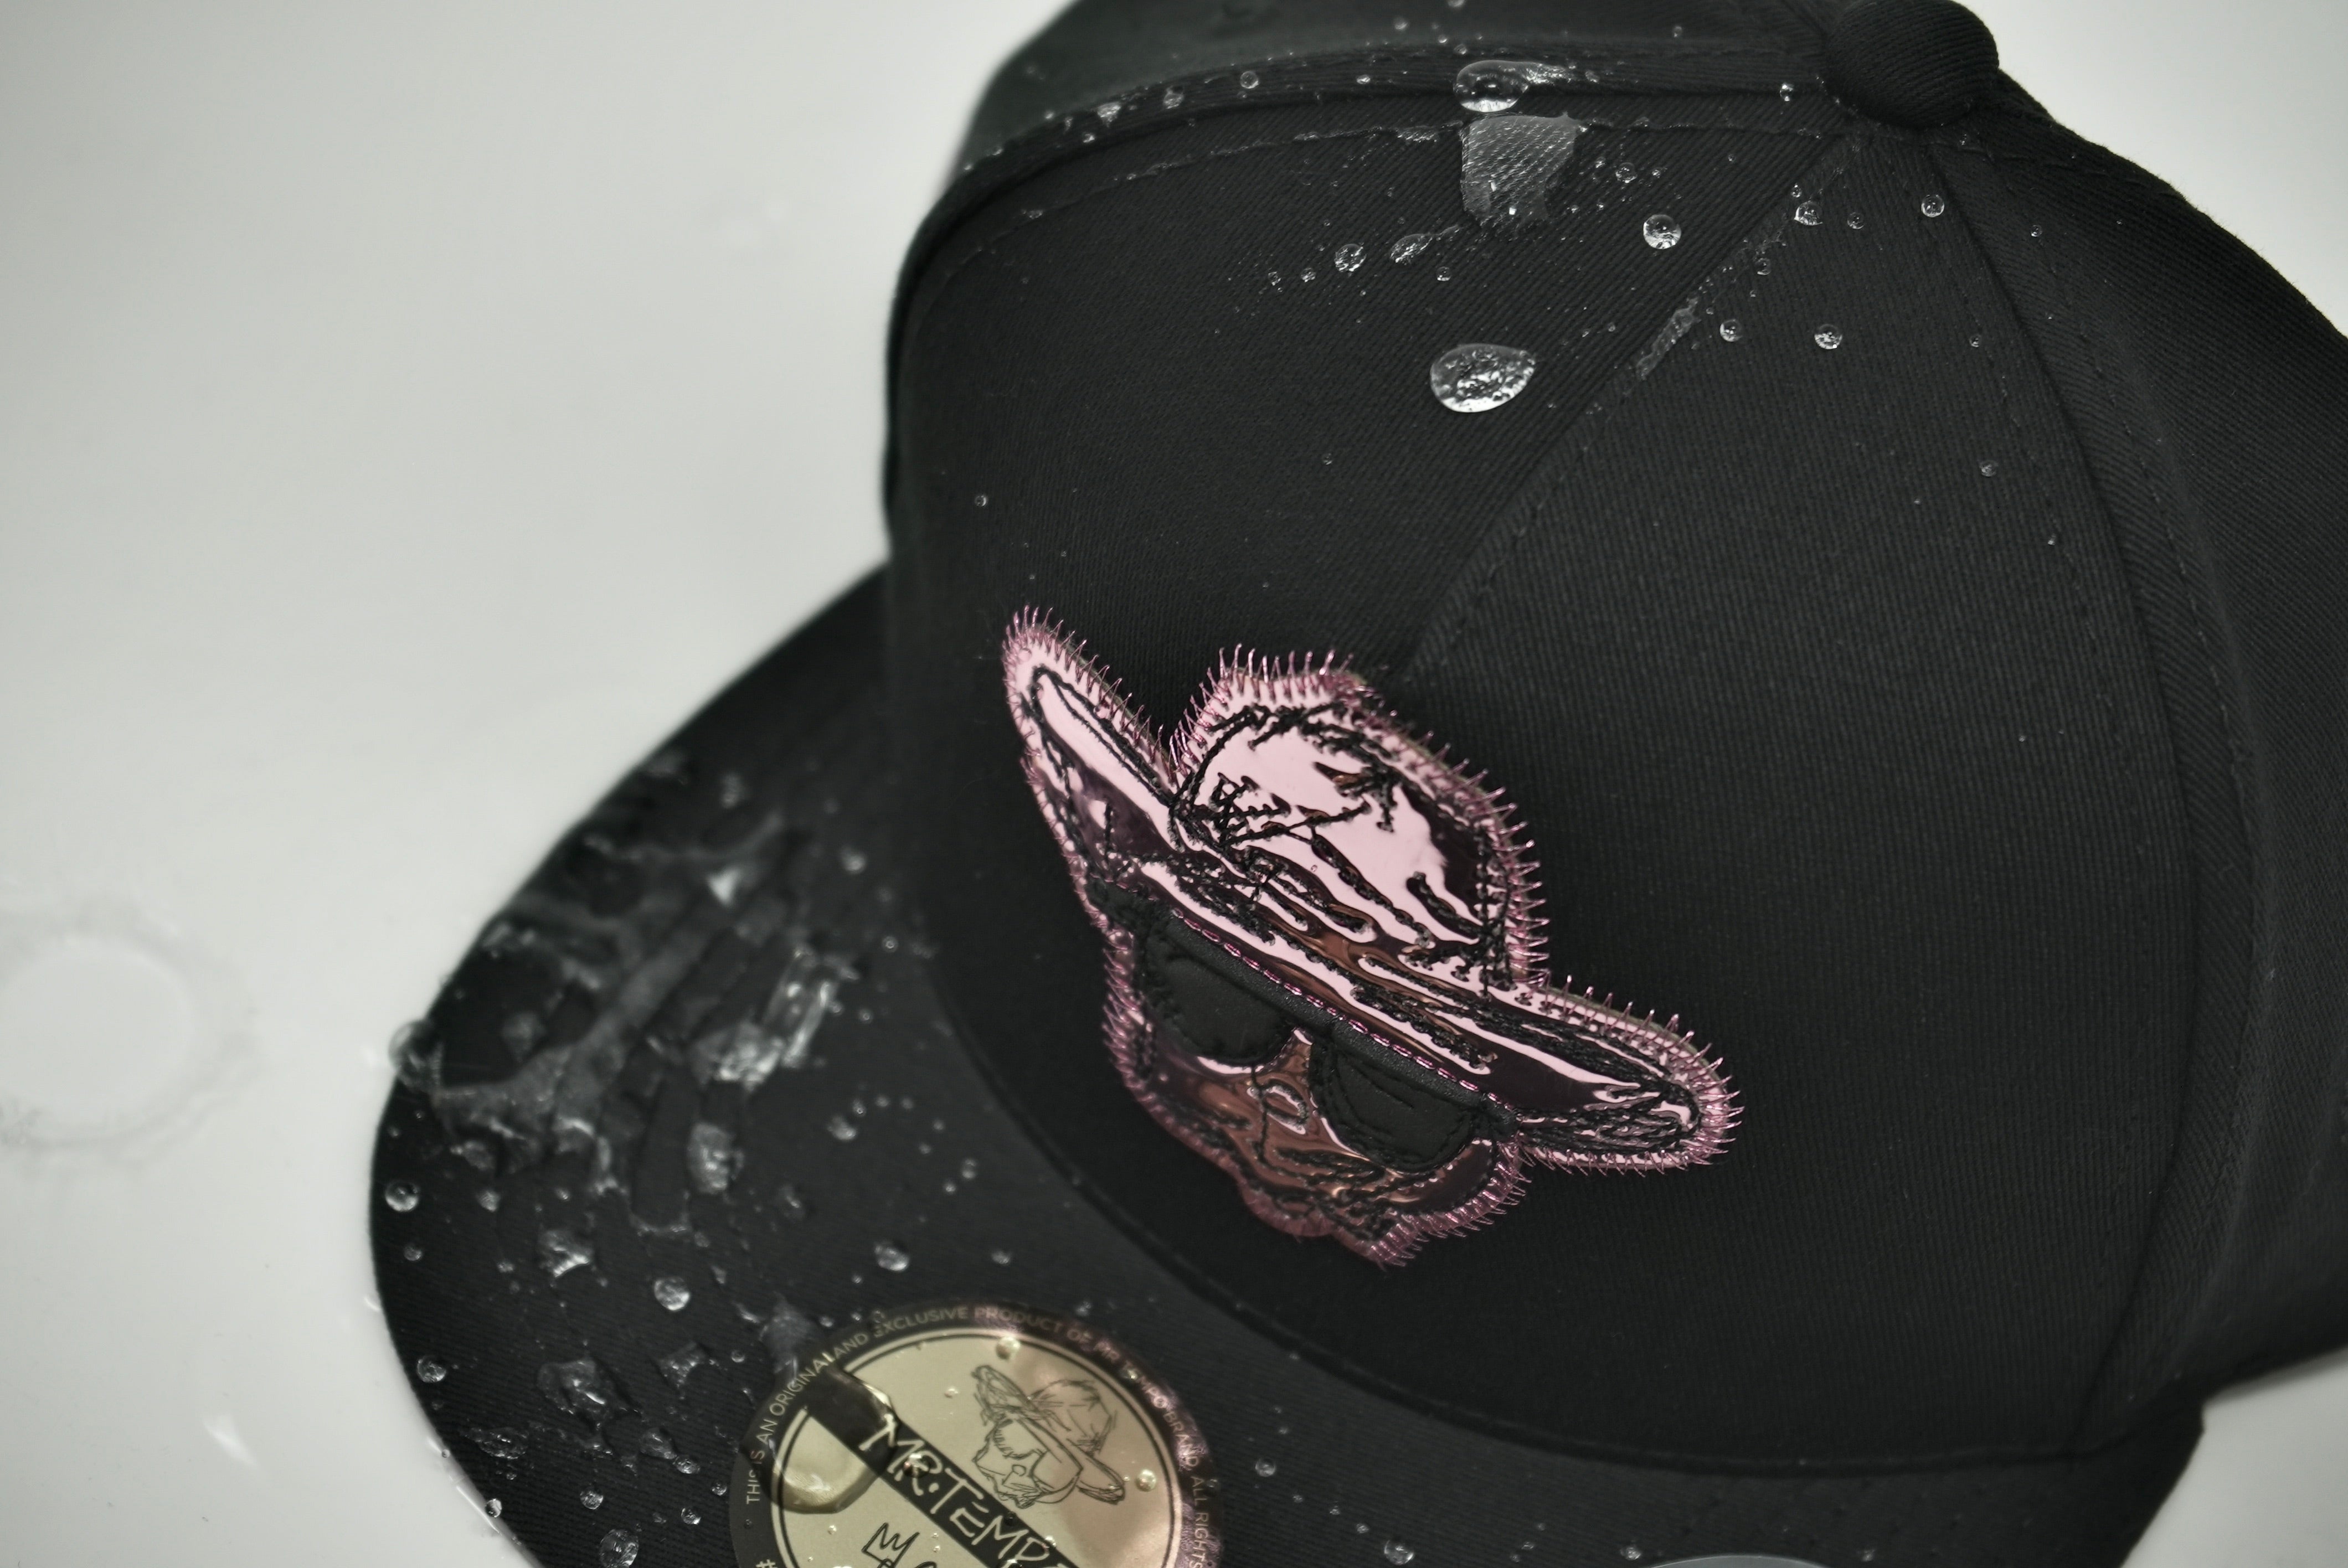 Mr.Tempo Pink/Black Hat